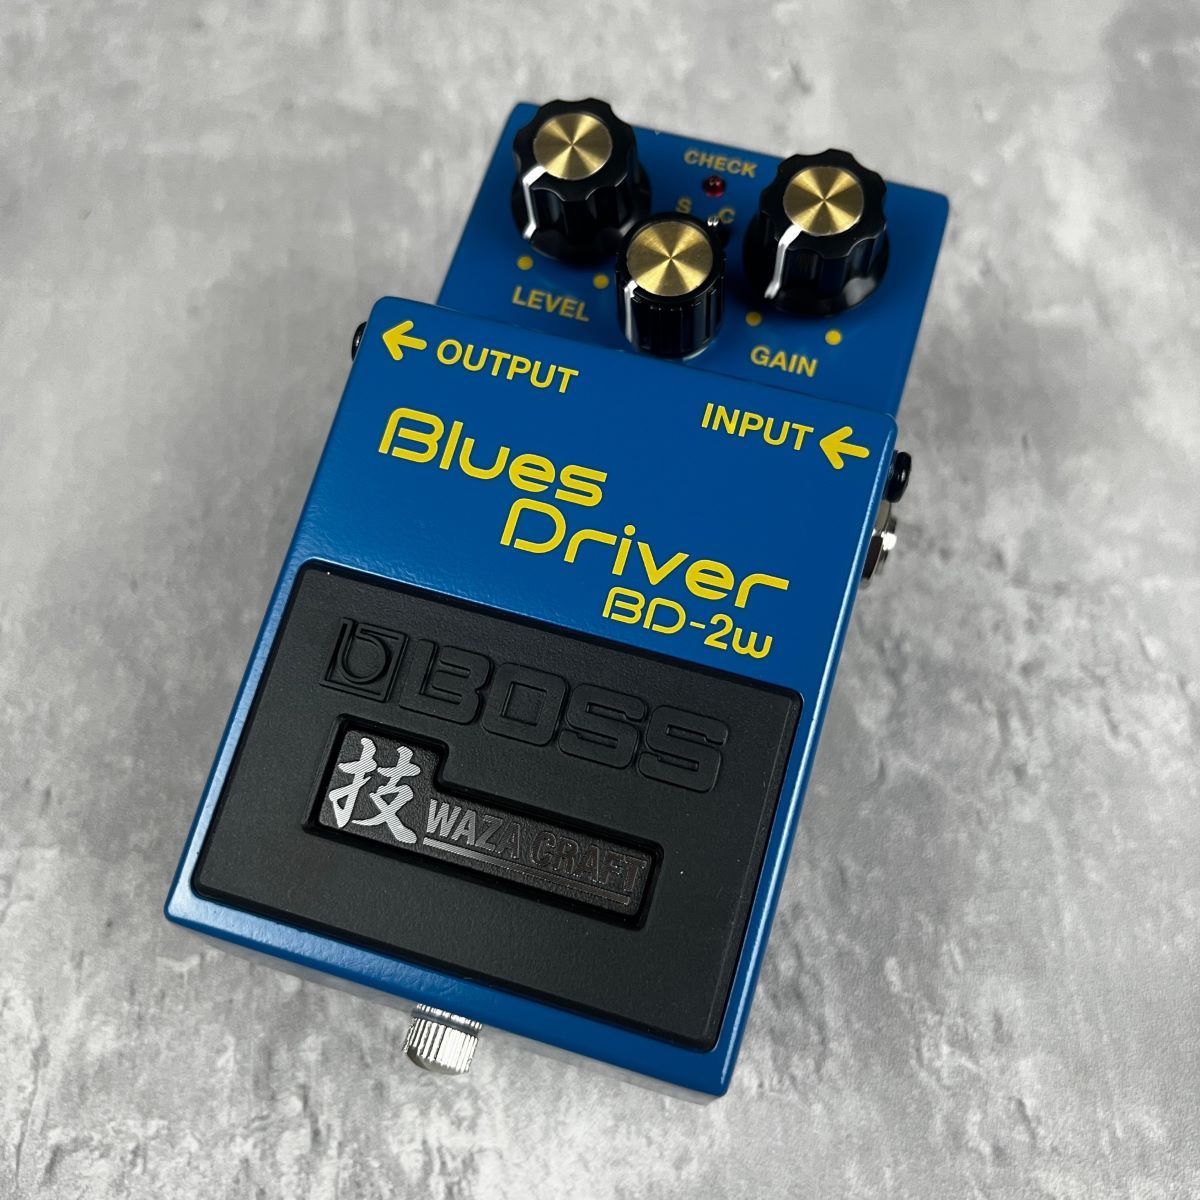 BOSS BD-2W (J) BluesDriver オーバードライブ エフェクター 技 WAZA